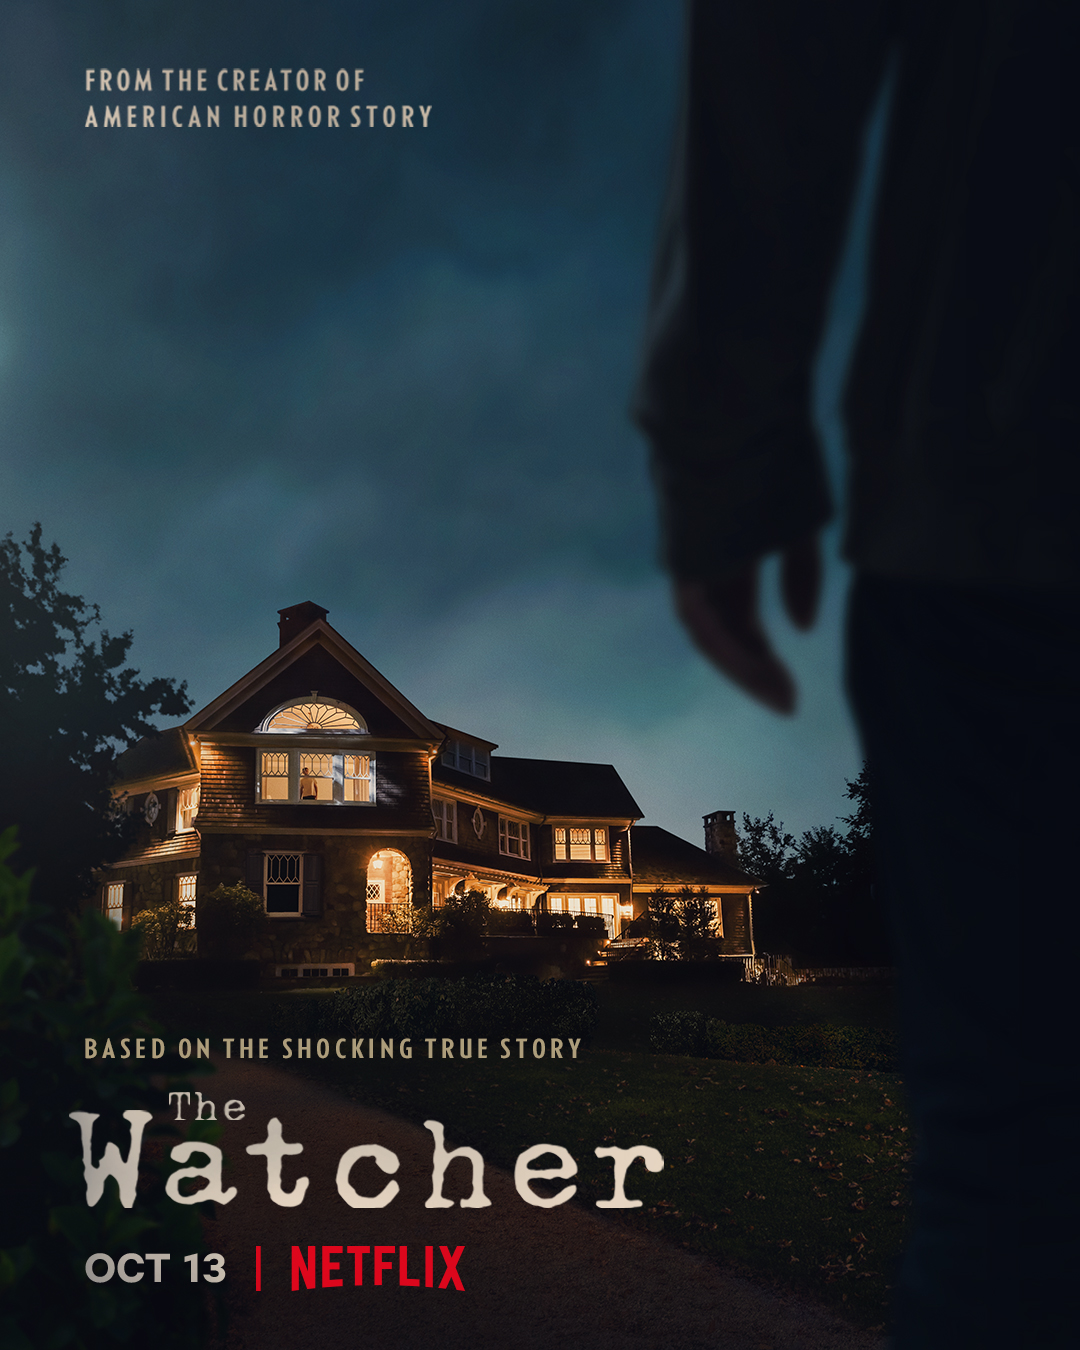 Estrela de 'The Watcher', Mia Farrow se arrependeu de recusar papel em  'American Horror Story' - CinePOP